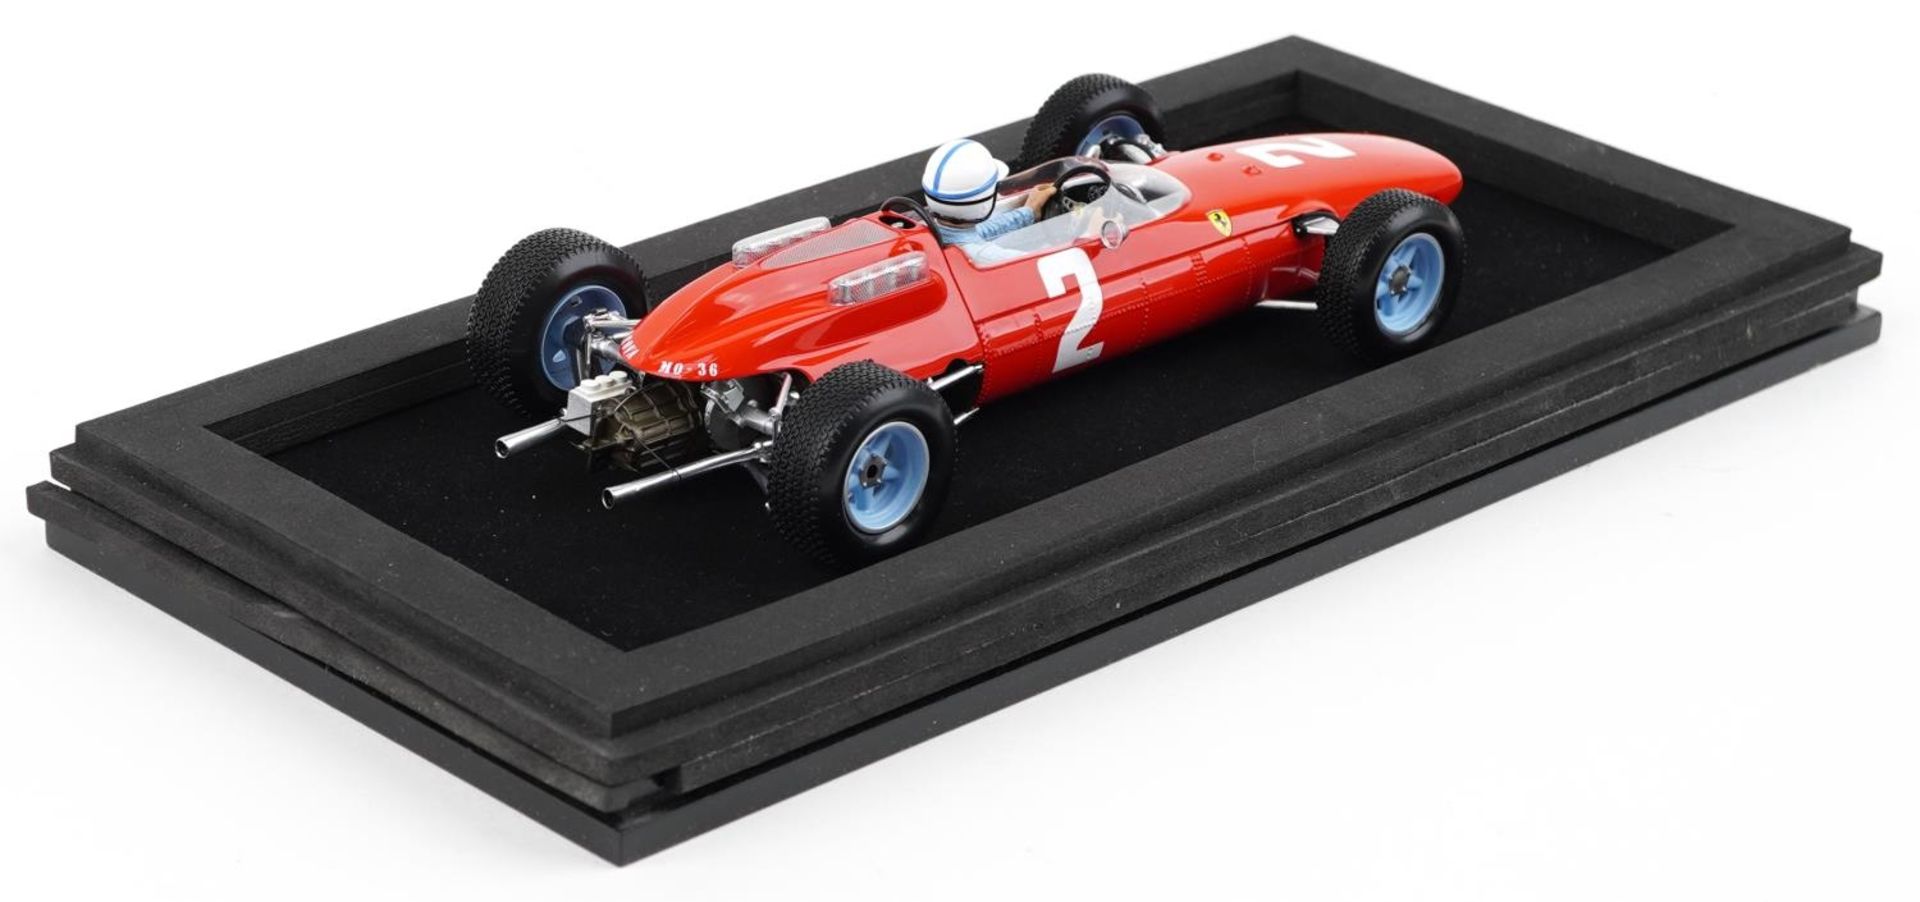 Looksmart 1:18 scale diecast model Ferrari 158 Winner of the Italian Grand Prix 1964, with box and - Image 3 of 3